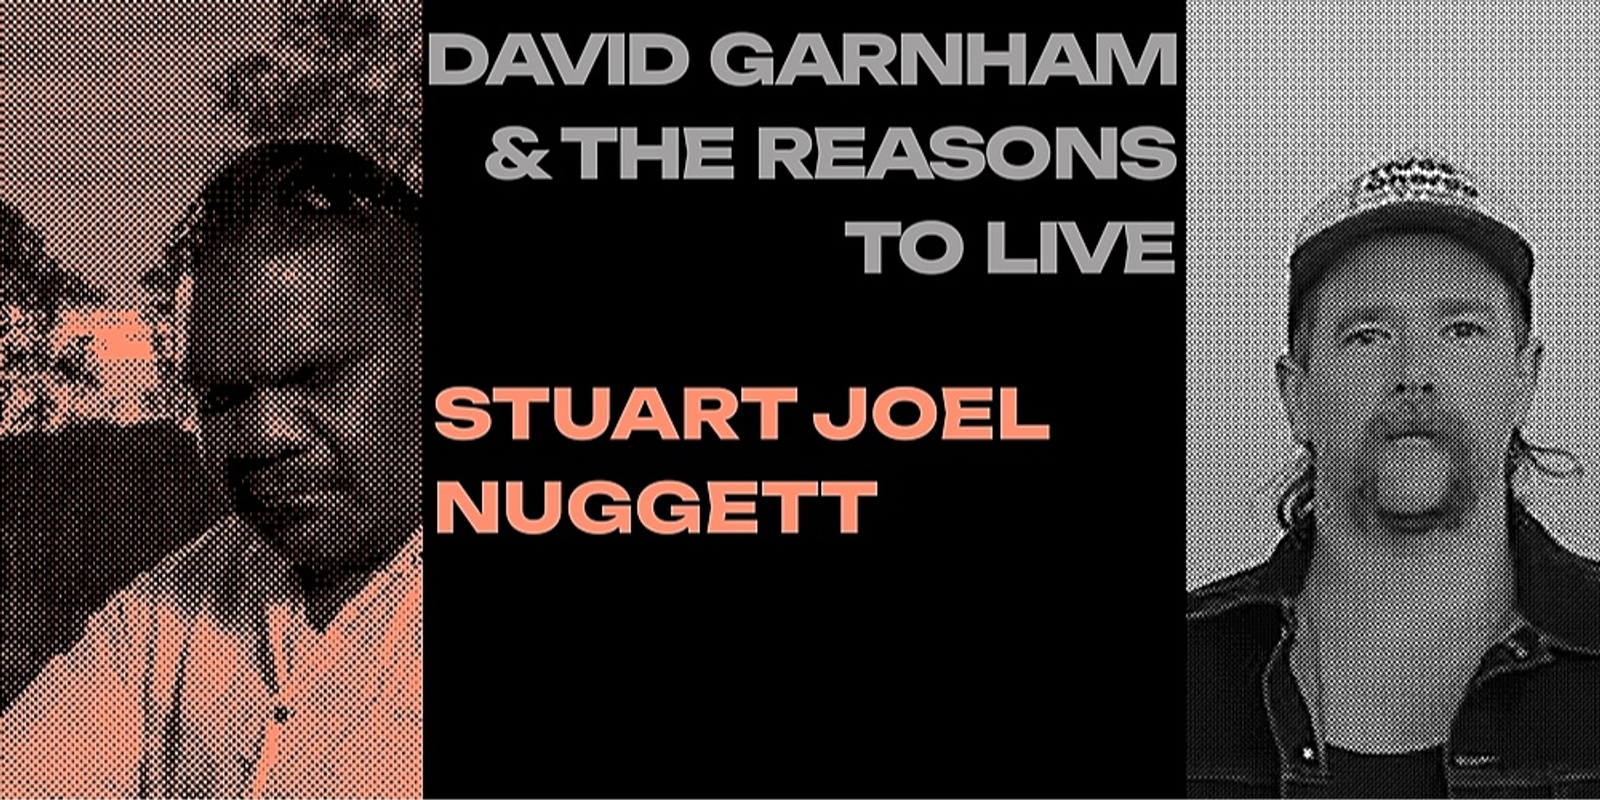 Stuart Joel Nuggett and David Garnham & the Reasons to Live